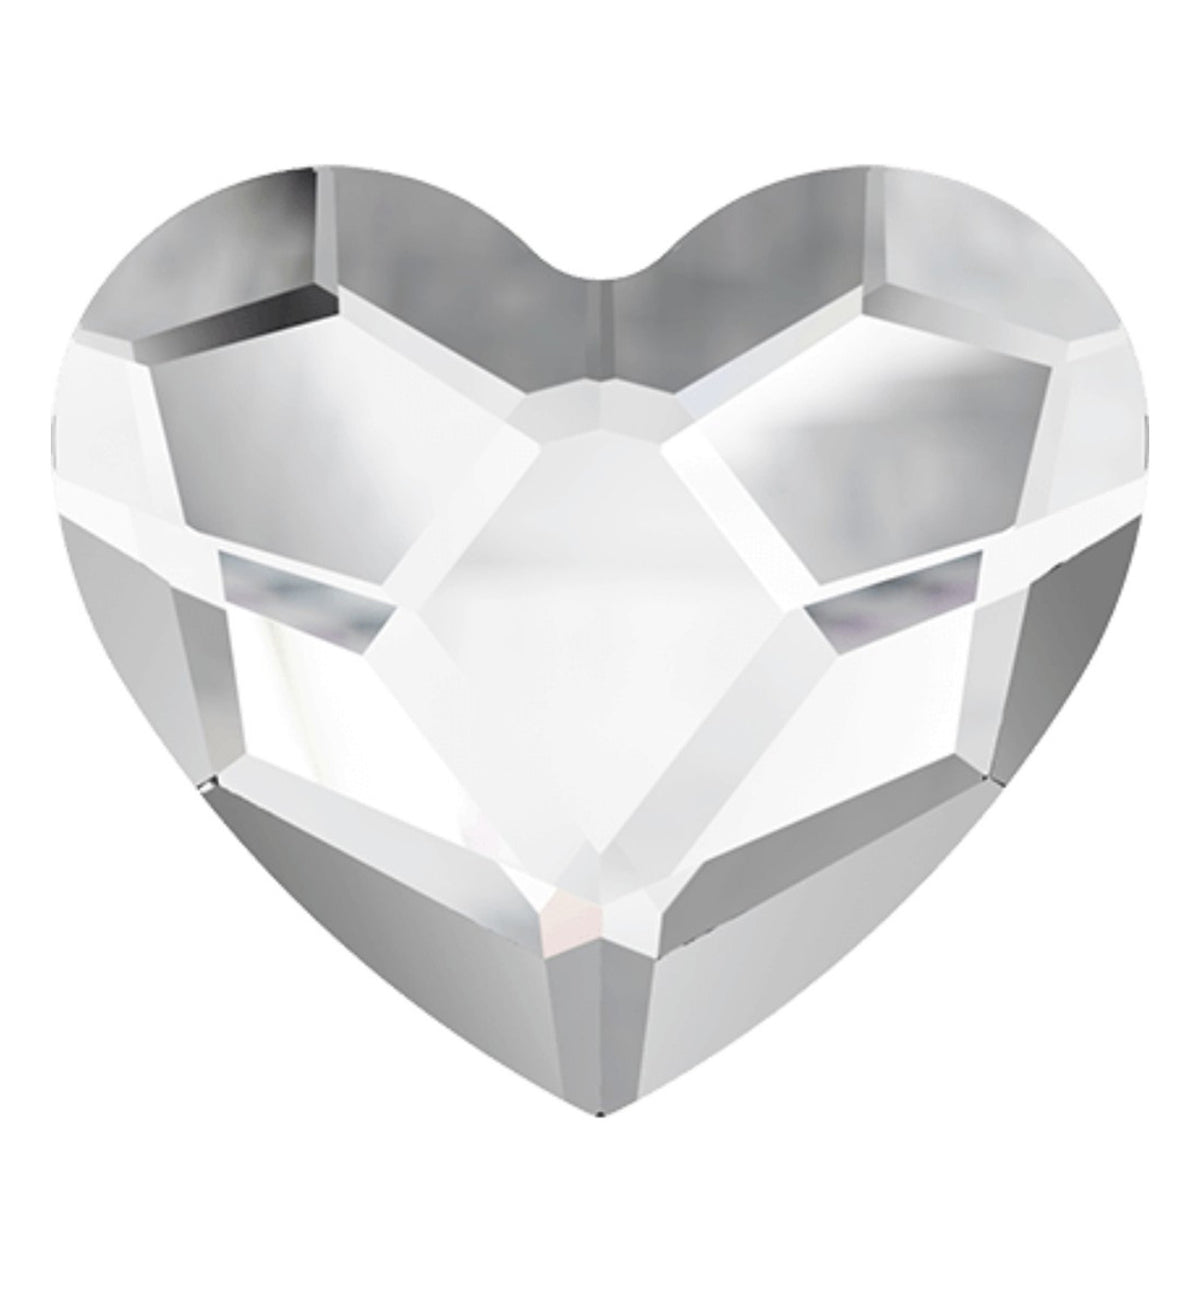 Hanky Panky Crystal Heart V-kini (482SWHRT),Large,Marshmallow - Marshmallow,Large